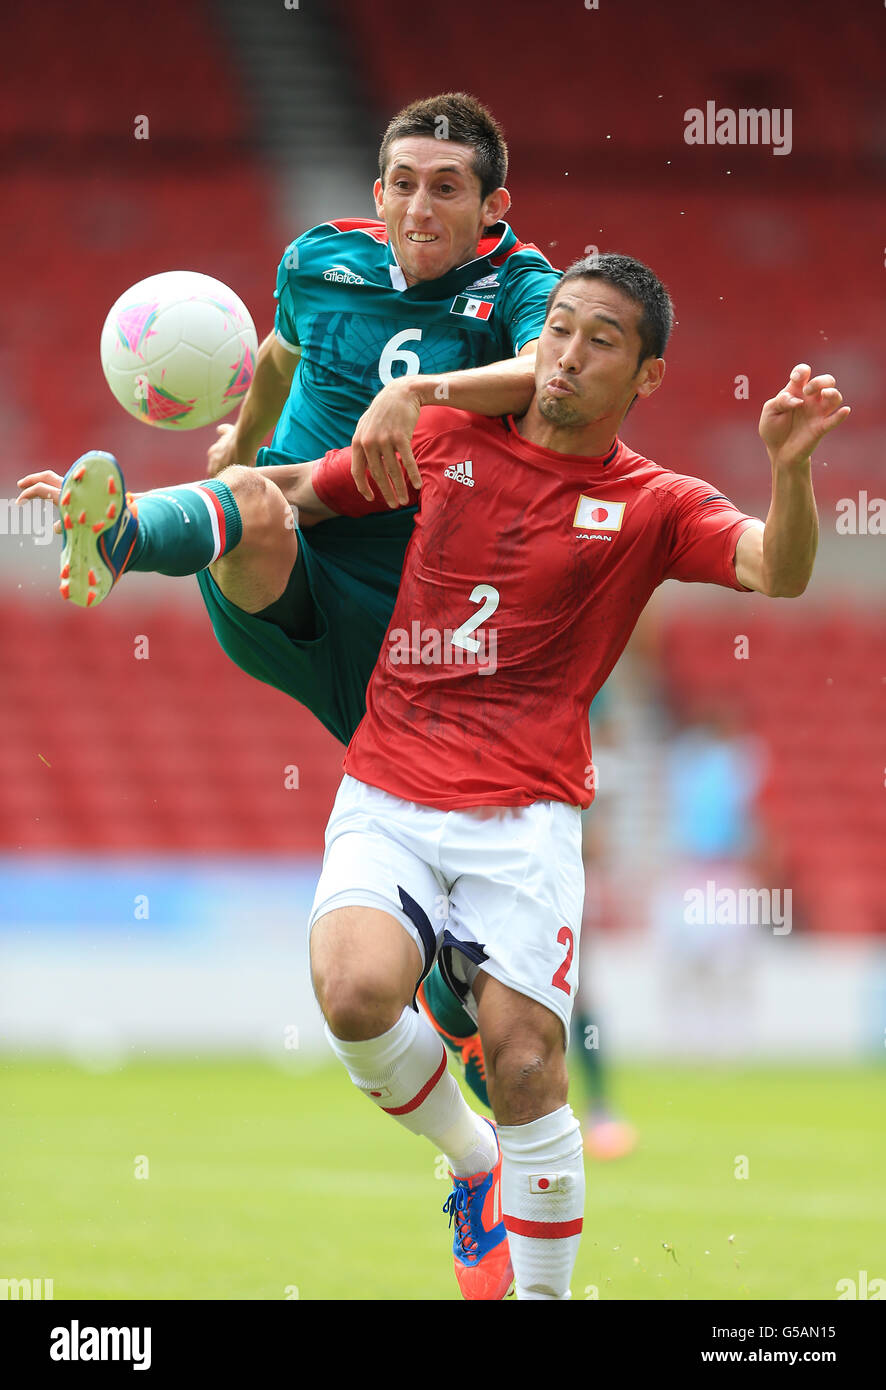 Japan's Yuhei Tokunaga and Mexico's Hector Herrera battle for the ball Stock Photo